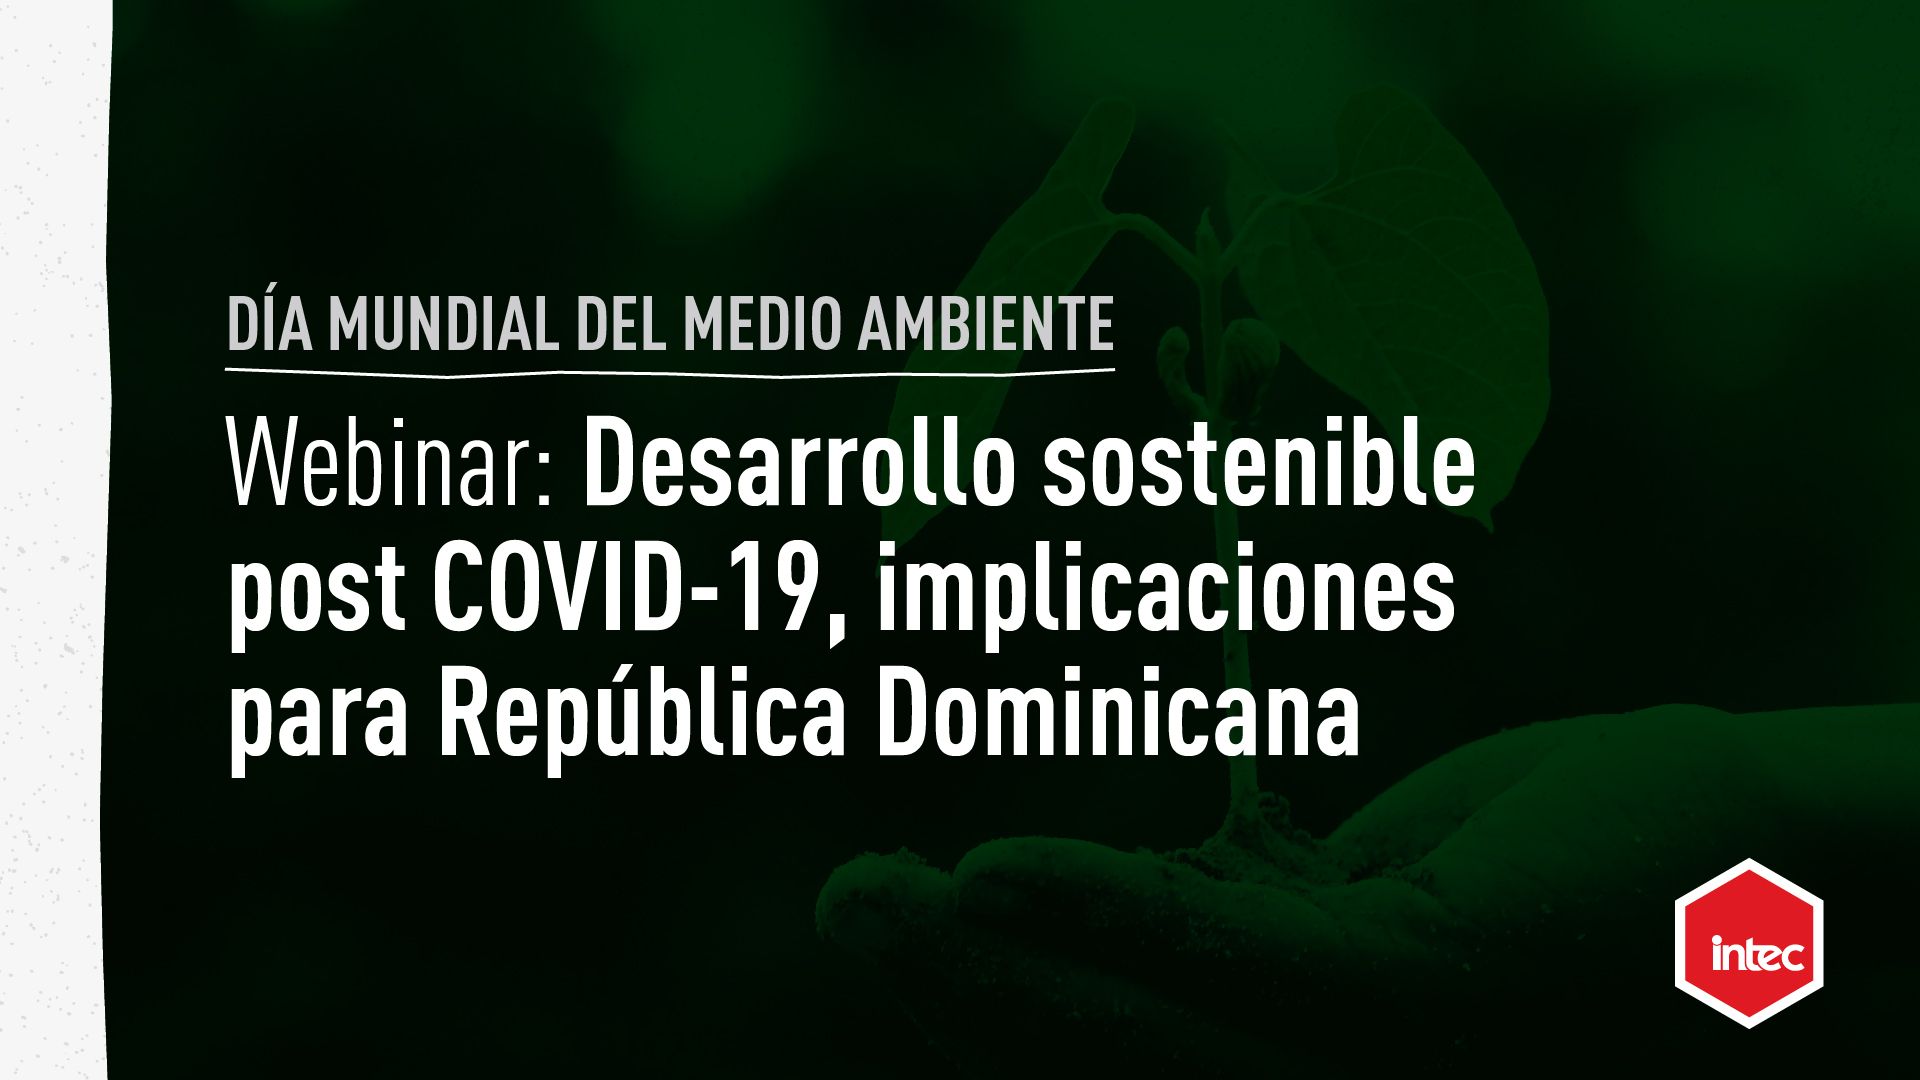 Medio%20ambiente-4c27c6e0 Instituto Tecnológico de Santo Domingo - What will be the environmental situation of the Dominican Republic after COVID-19?